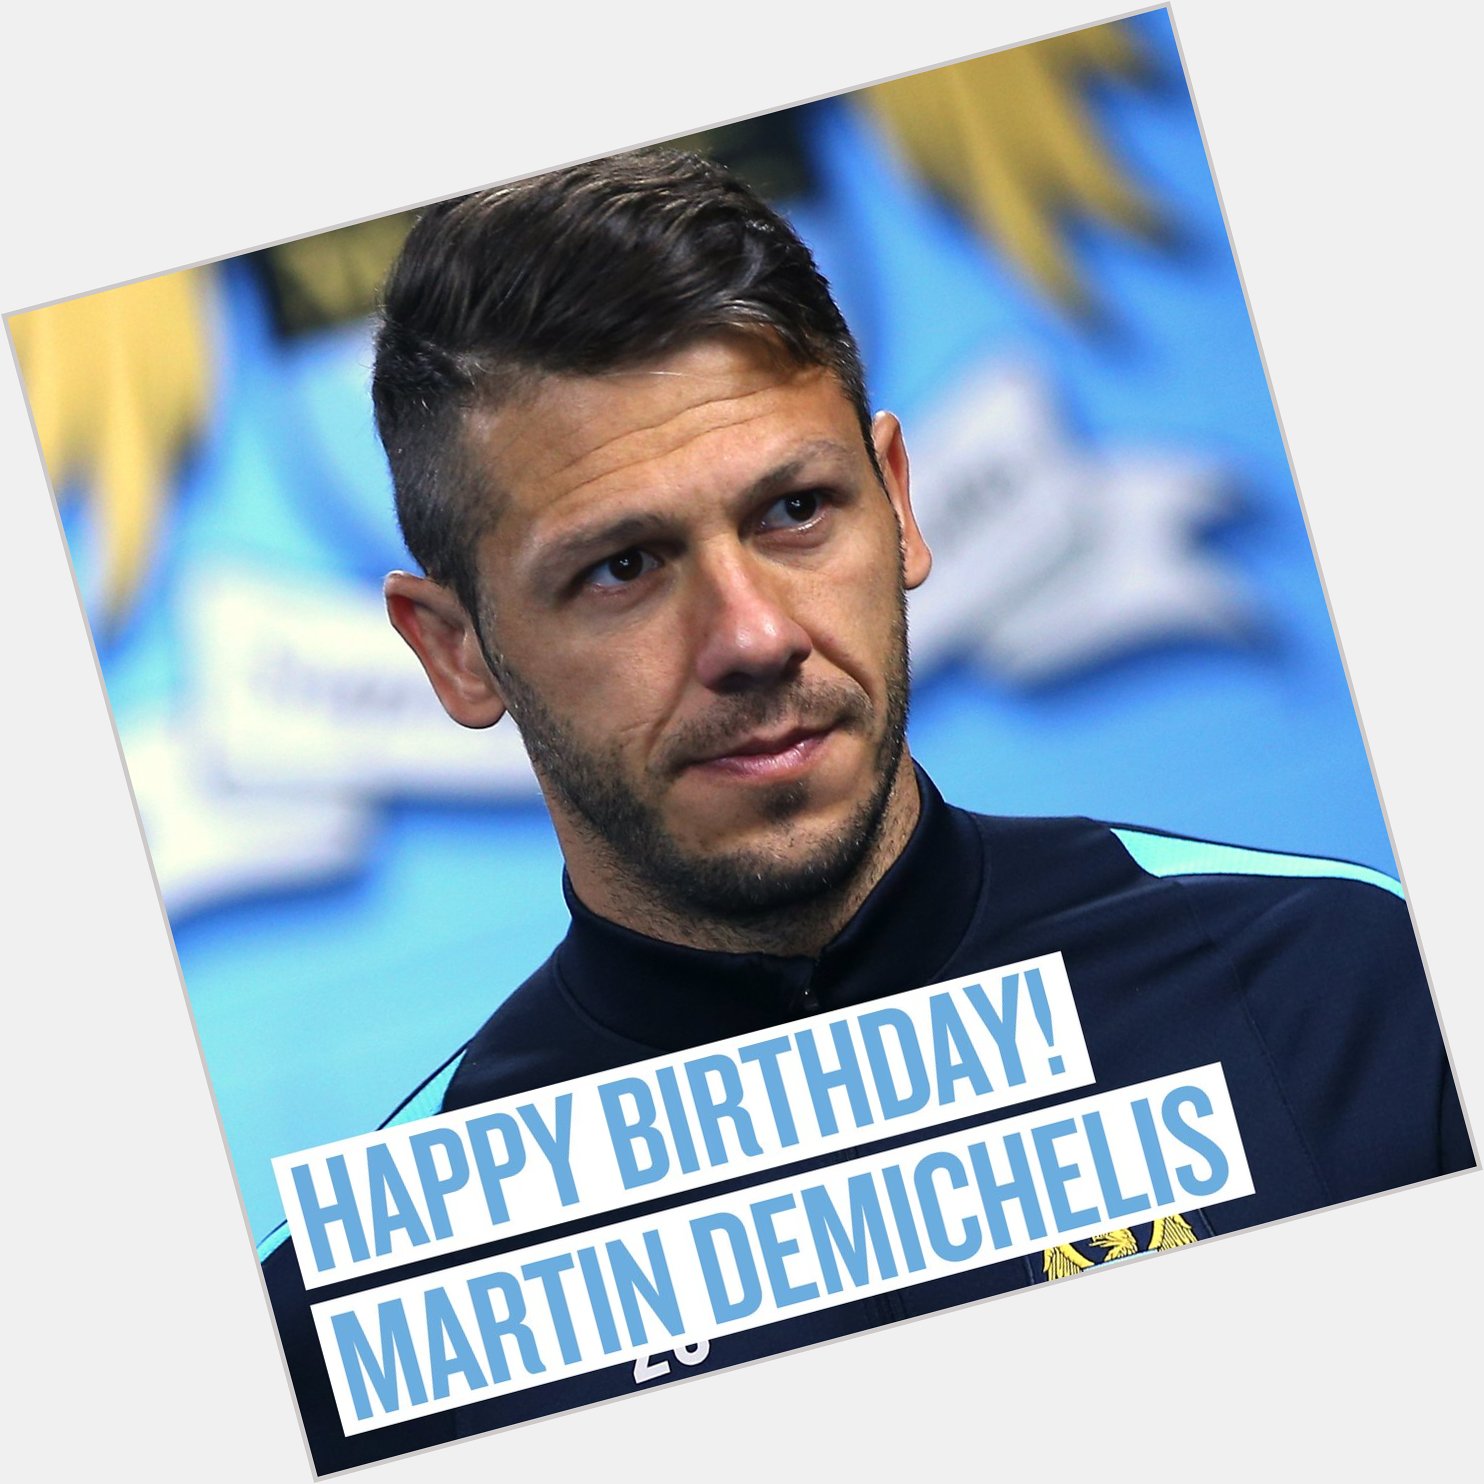 Man City: Join us in wishing Martin Demichelis a very happy 35th birthday today! 

Feliz cumpleaños, Martin! 